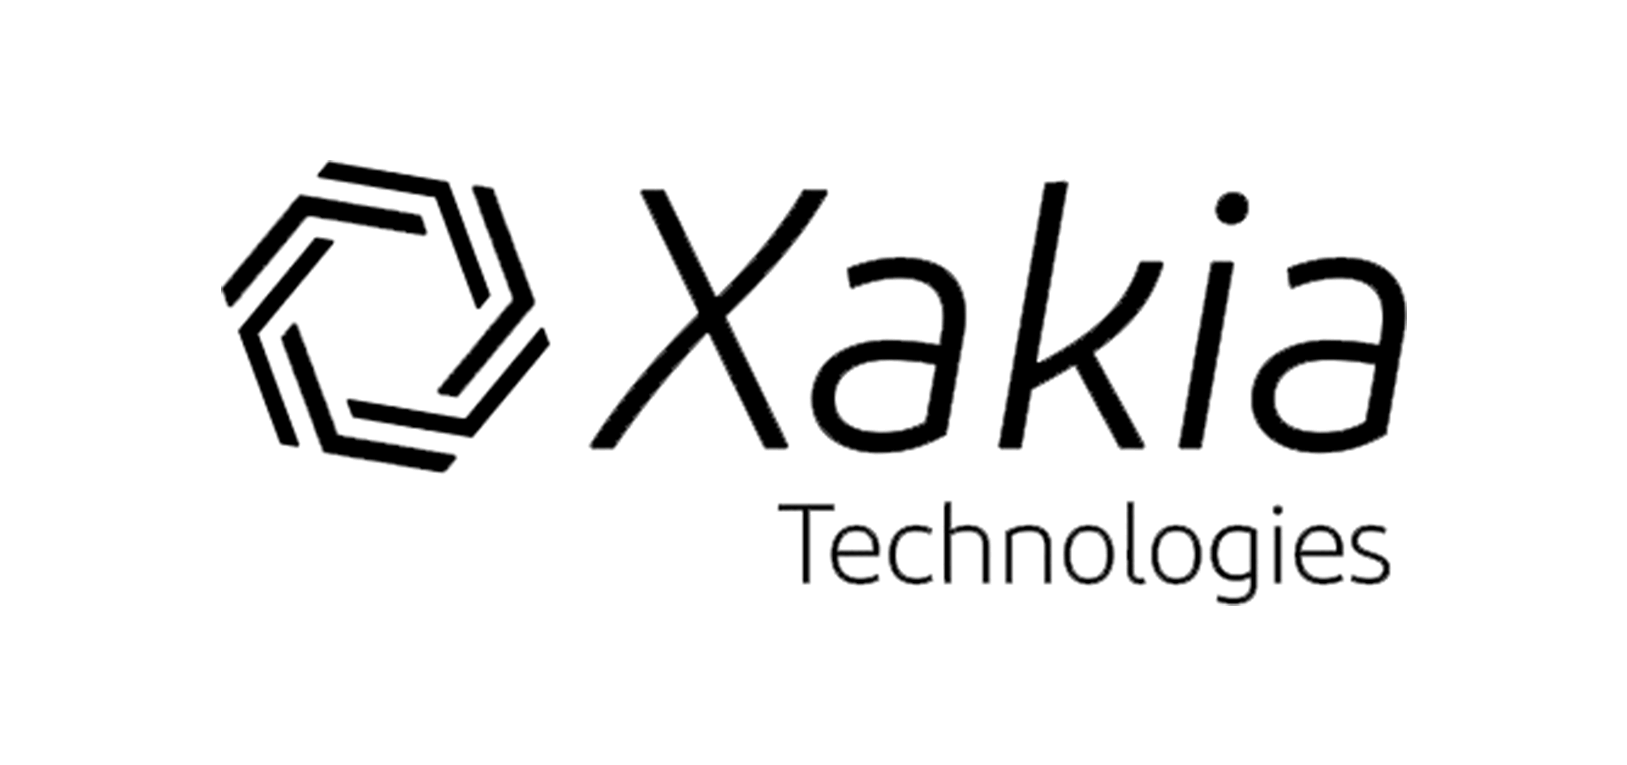 Xakia Logo